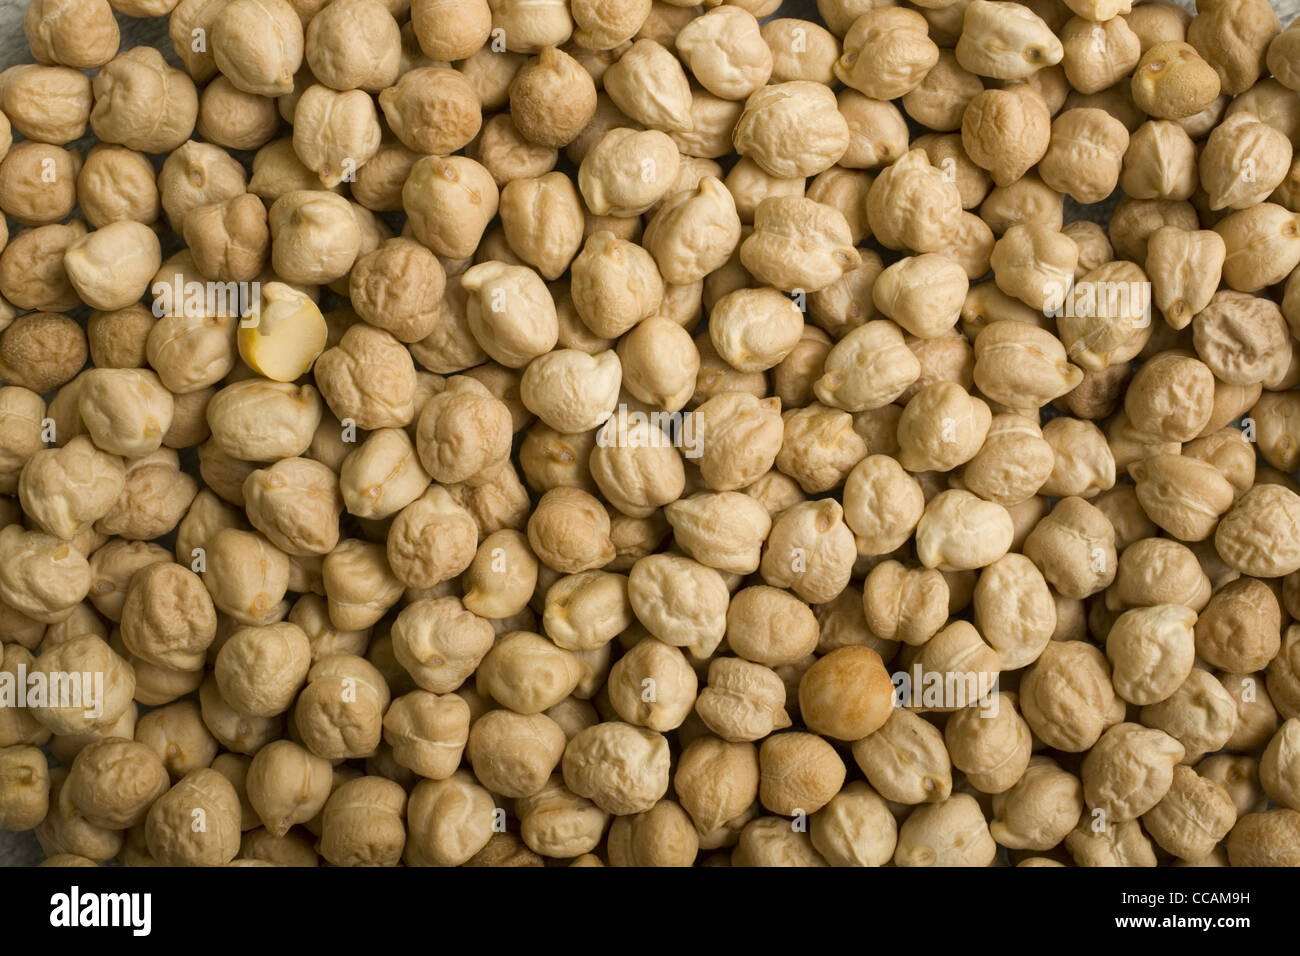 Chickpeas also known as Garbanzo beans. Stock Photo